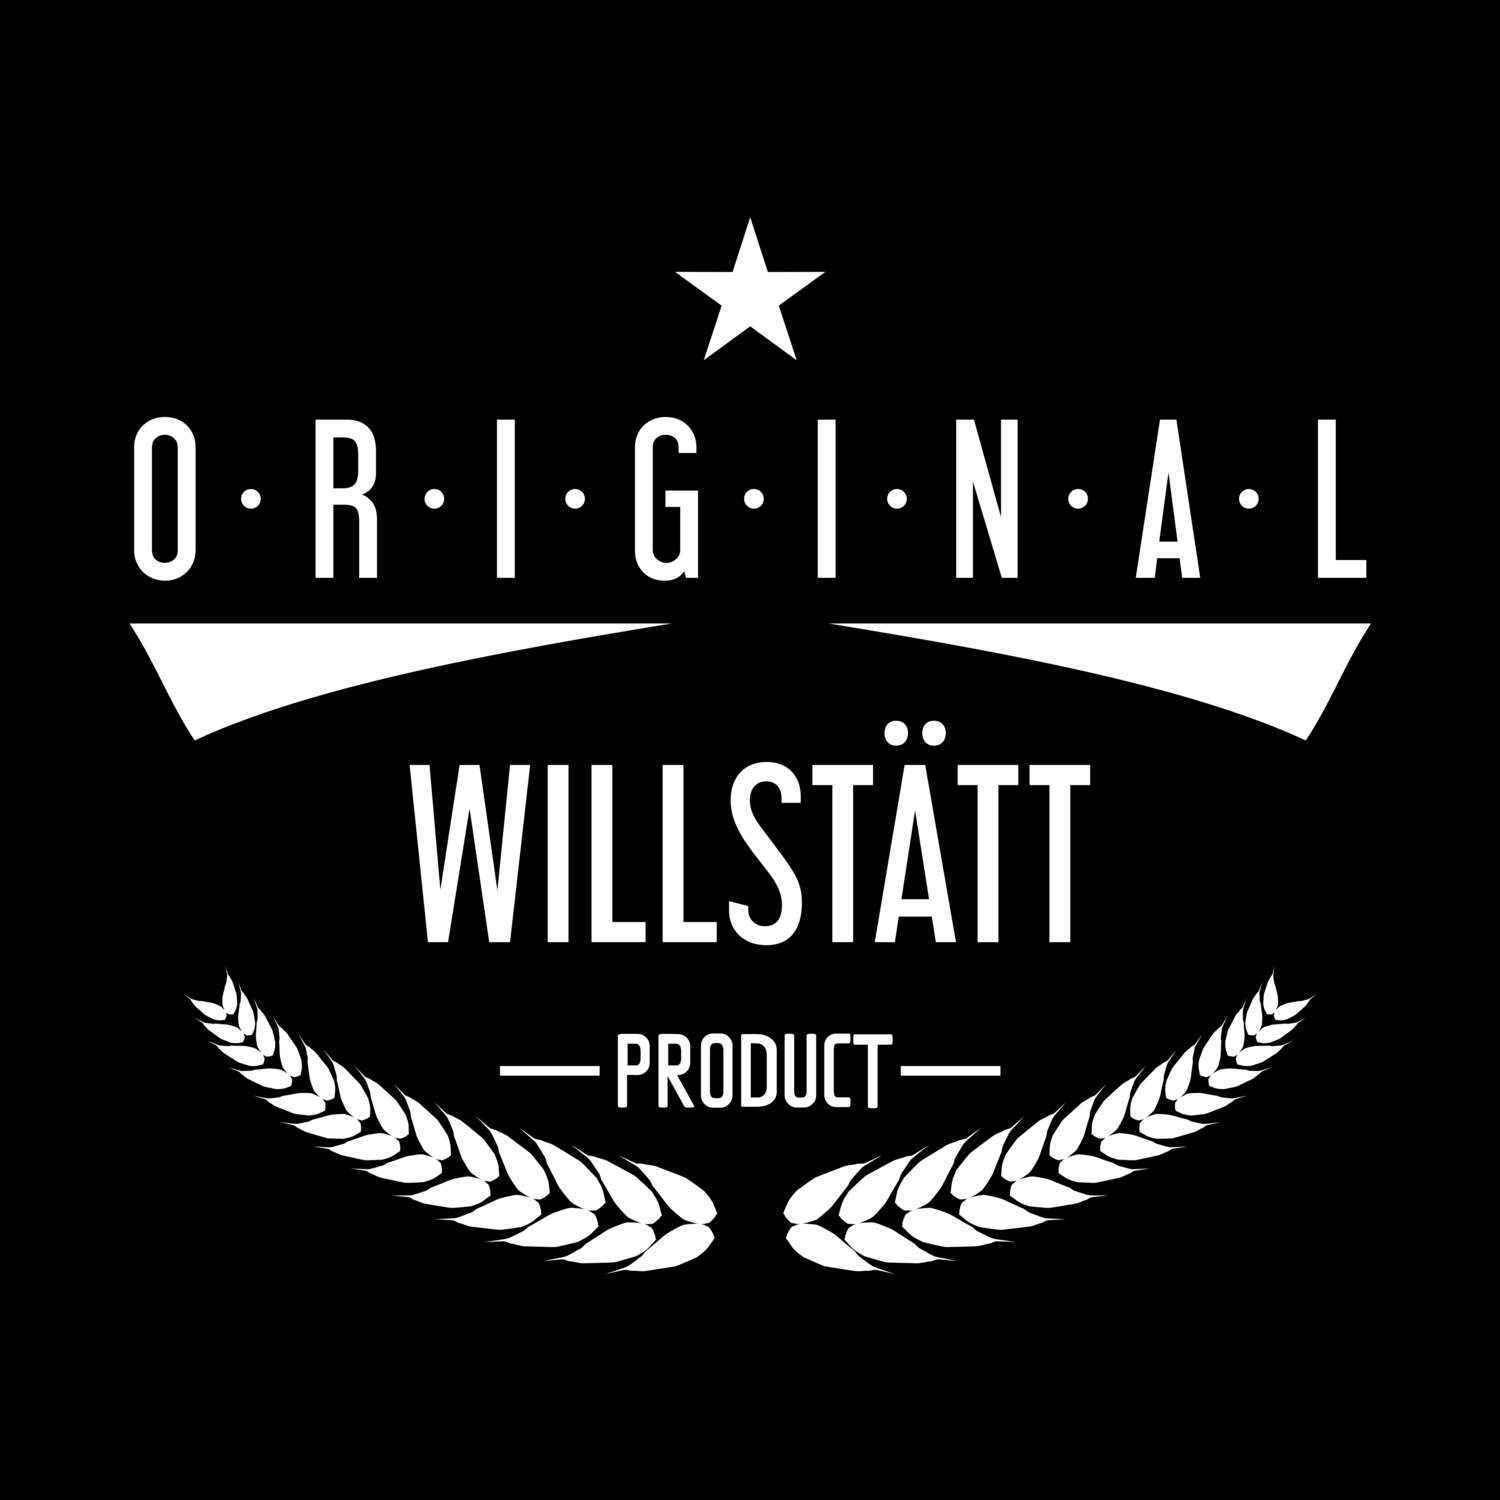 Willstätt T-Shirt »Original Product«